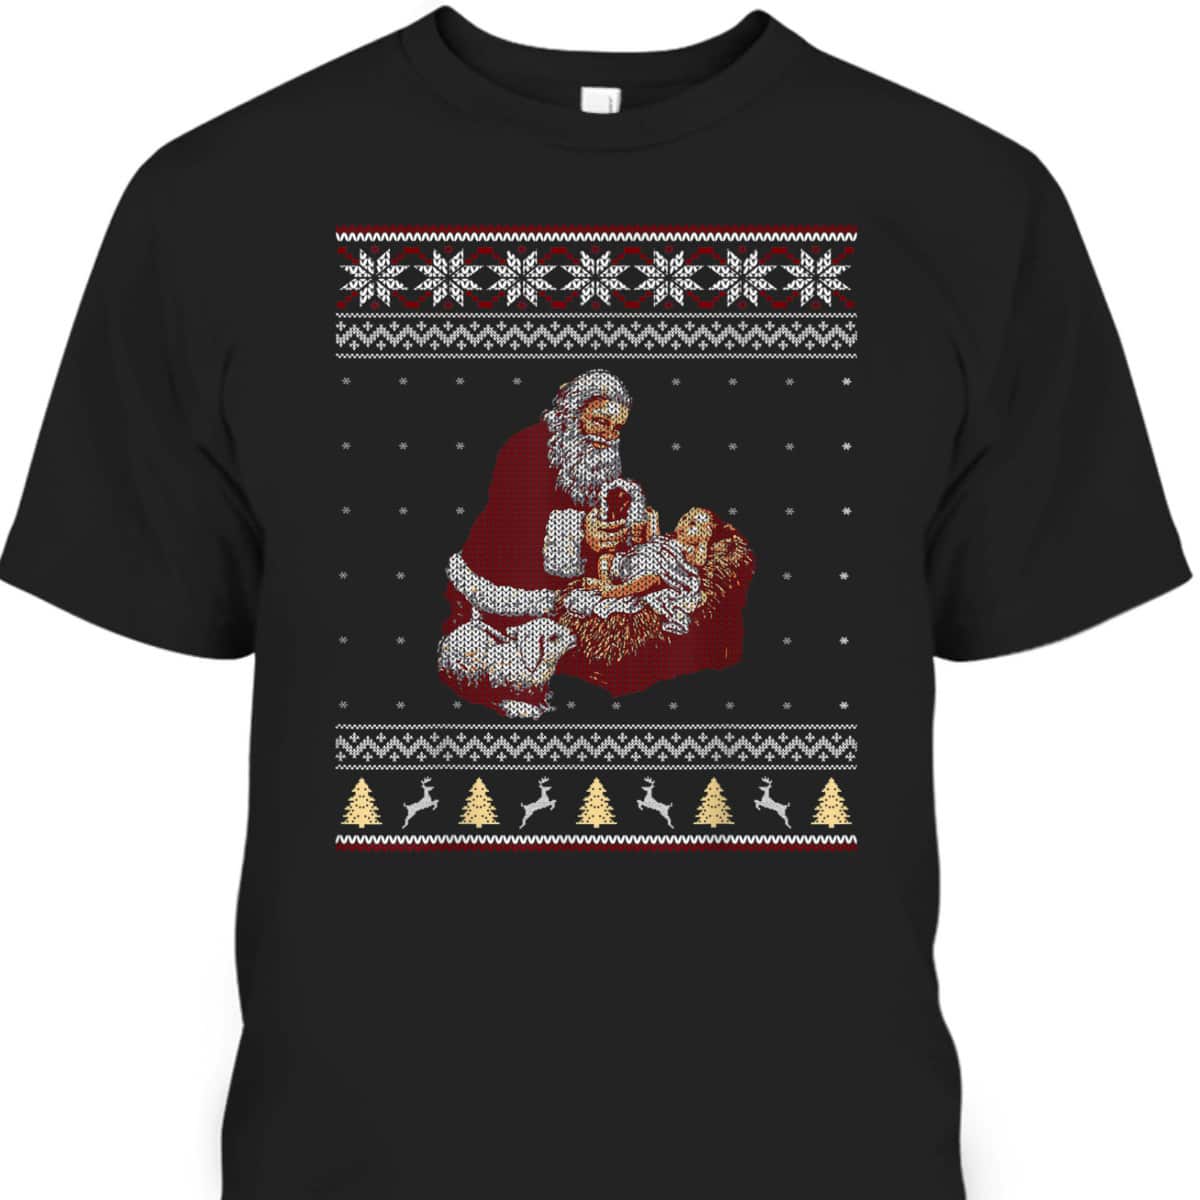 Santa Claus And Baby Jesus In The Manger Christmas Xmas T-Shirt